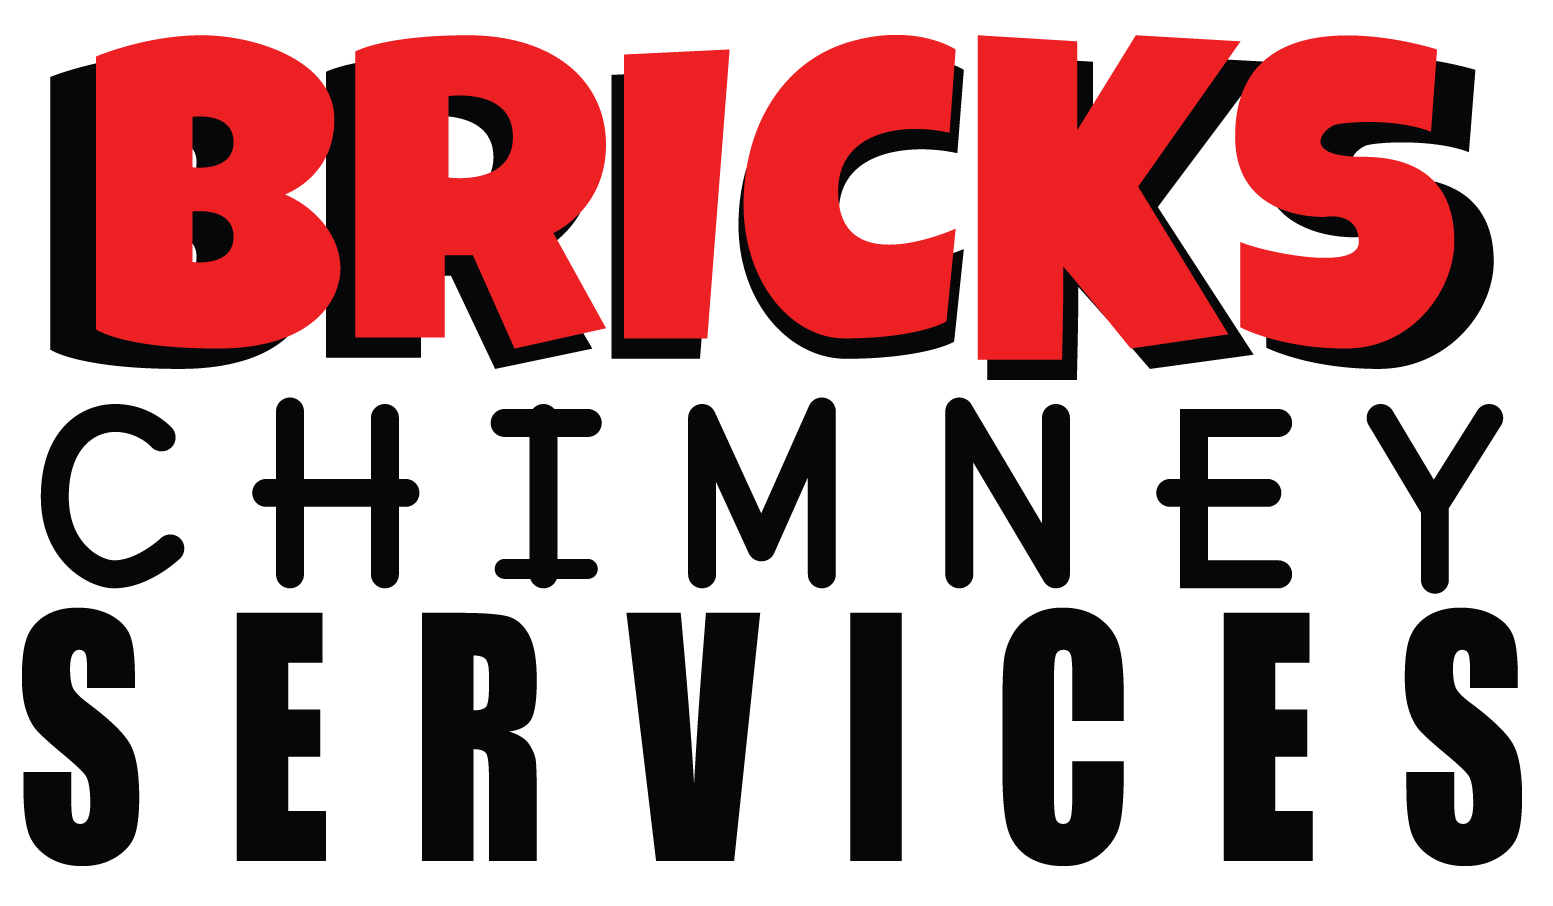 Bricks Chimney Services logo